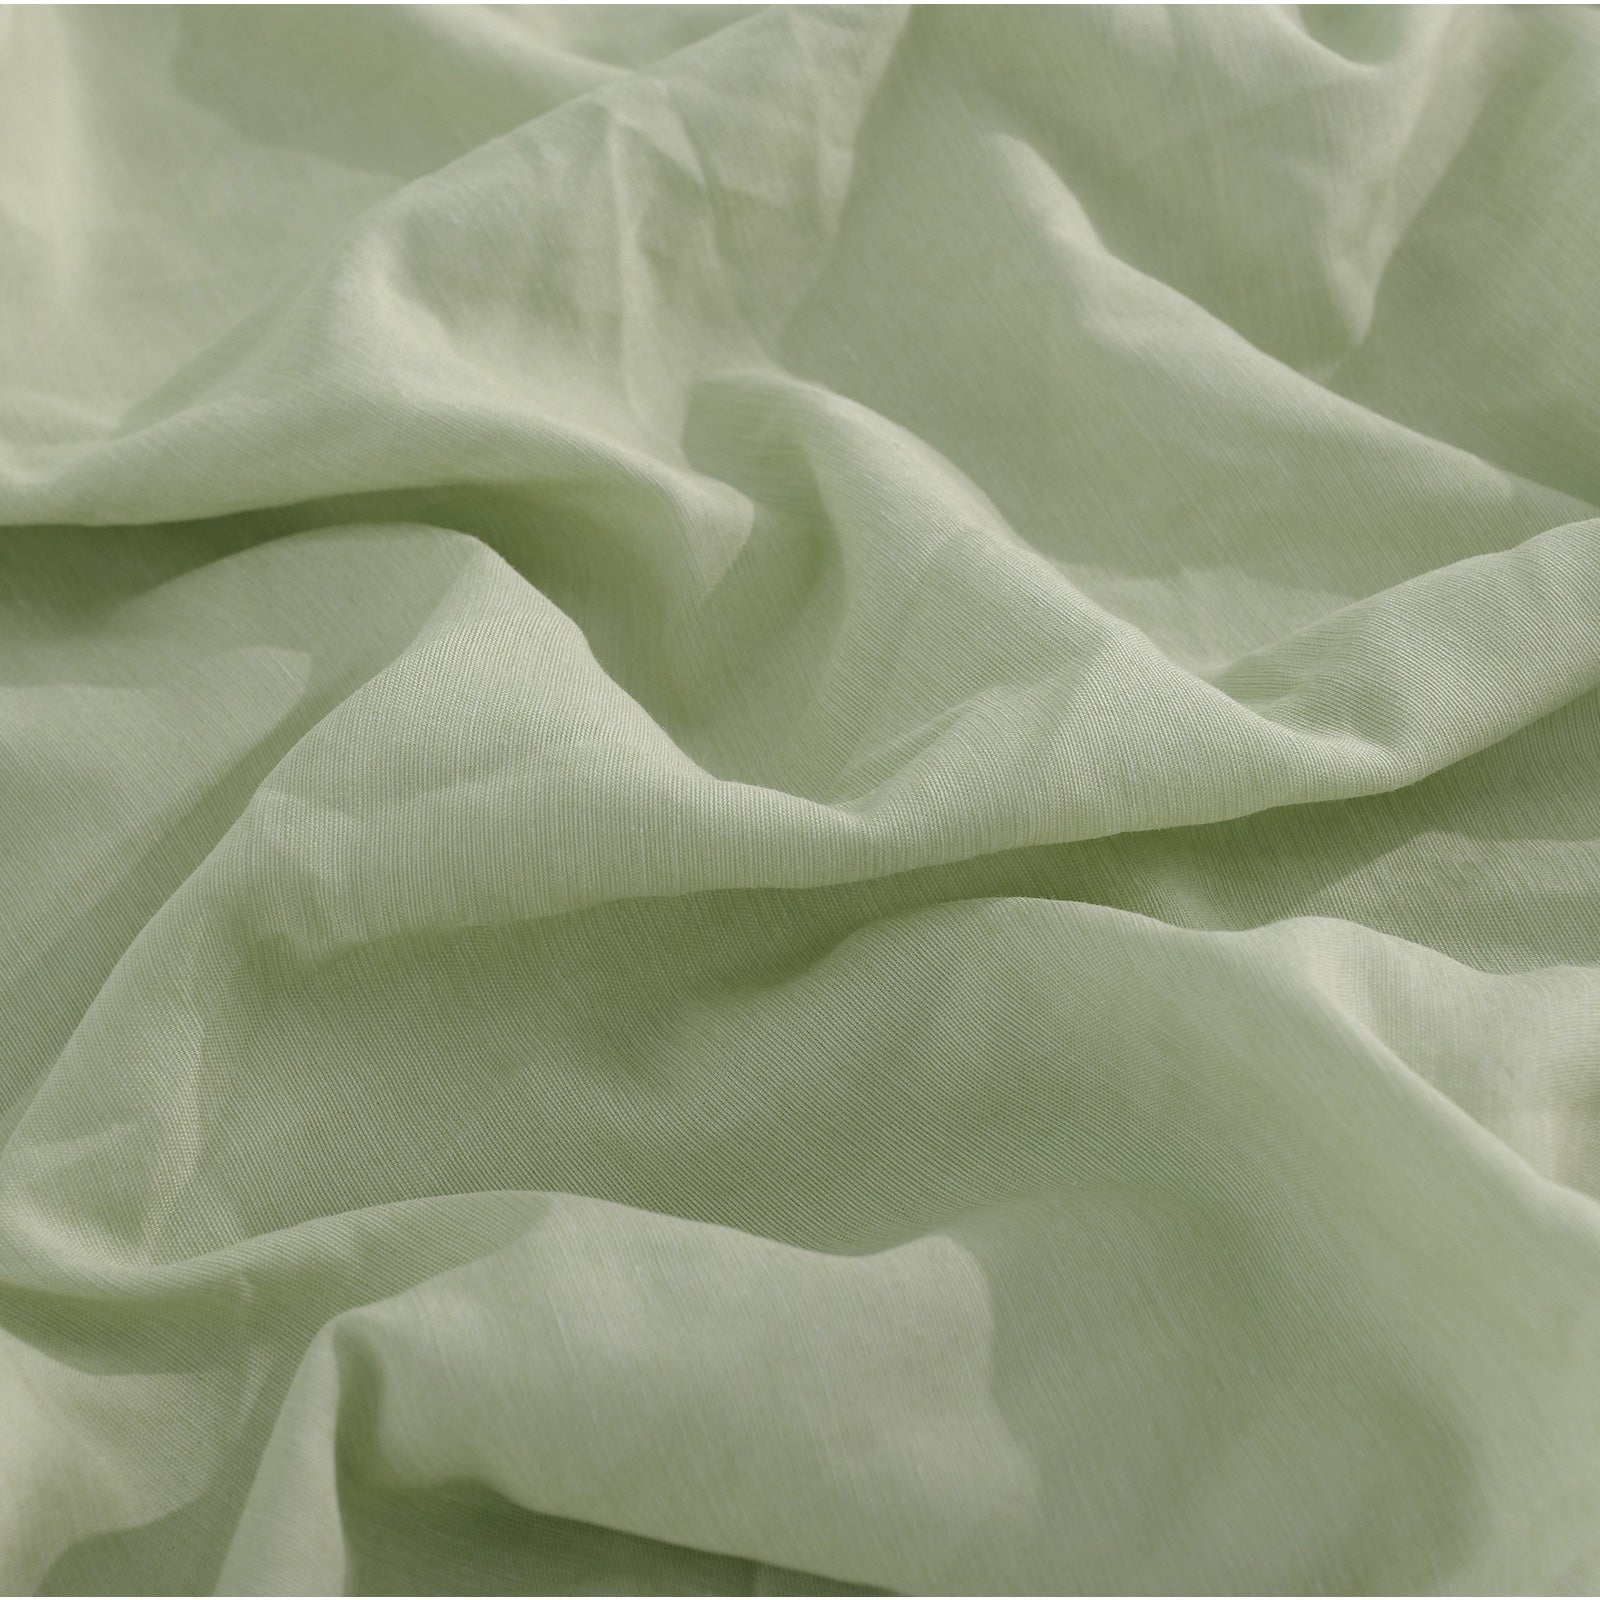 Royal Comfort Flax Linen Blend Sheet Set Bedding Luxury Breathable